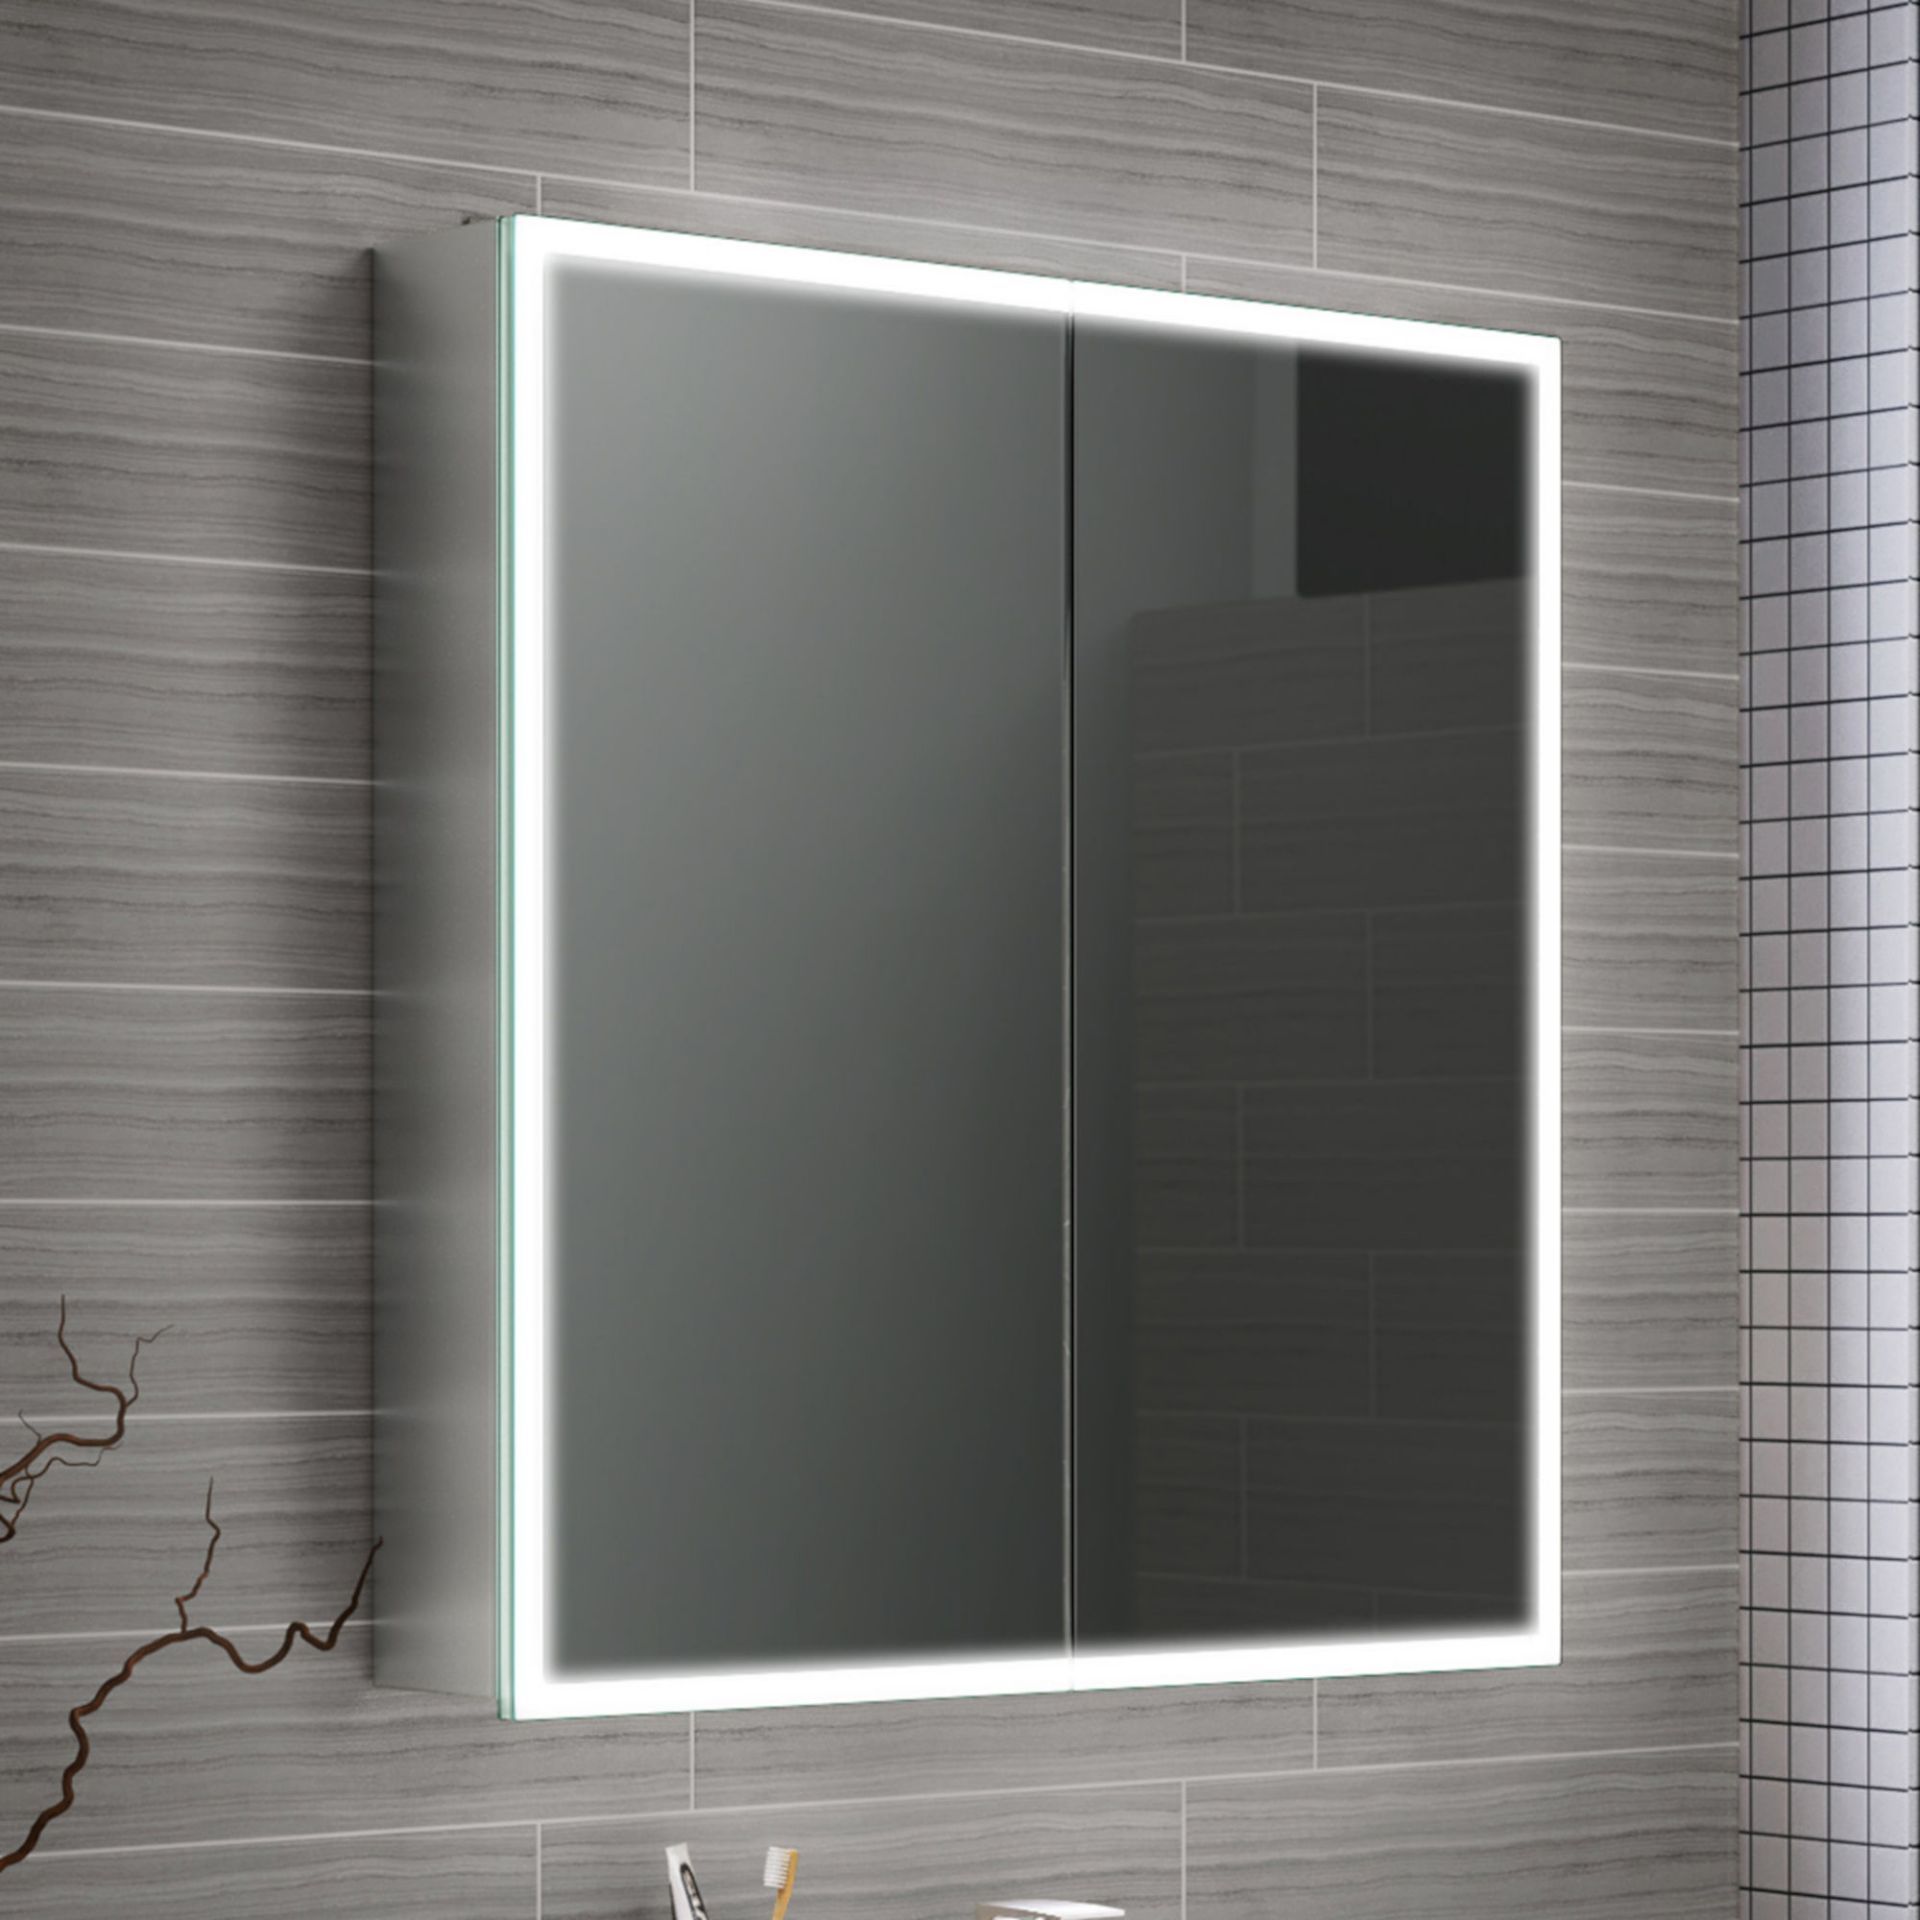 New 650 x 700 Cosmica Illuminated Led Mirror Cabinet. RRP £924.99.Mc162.We Love This Mirror